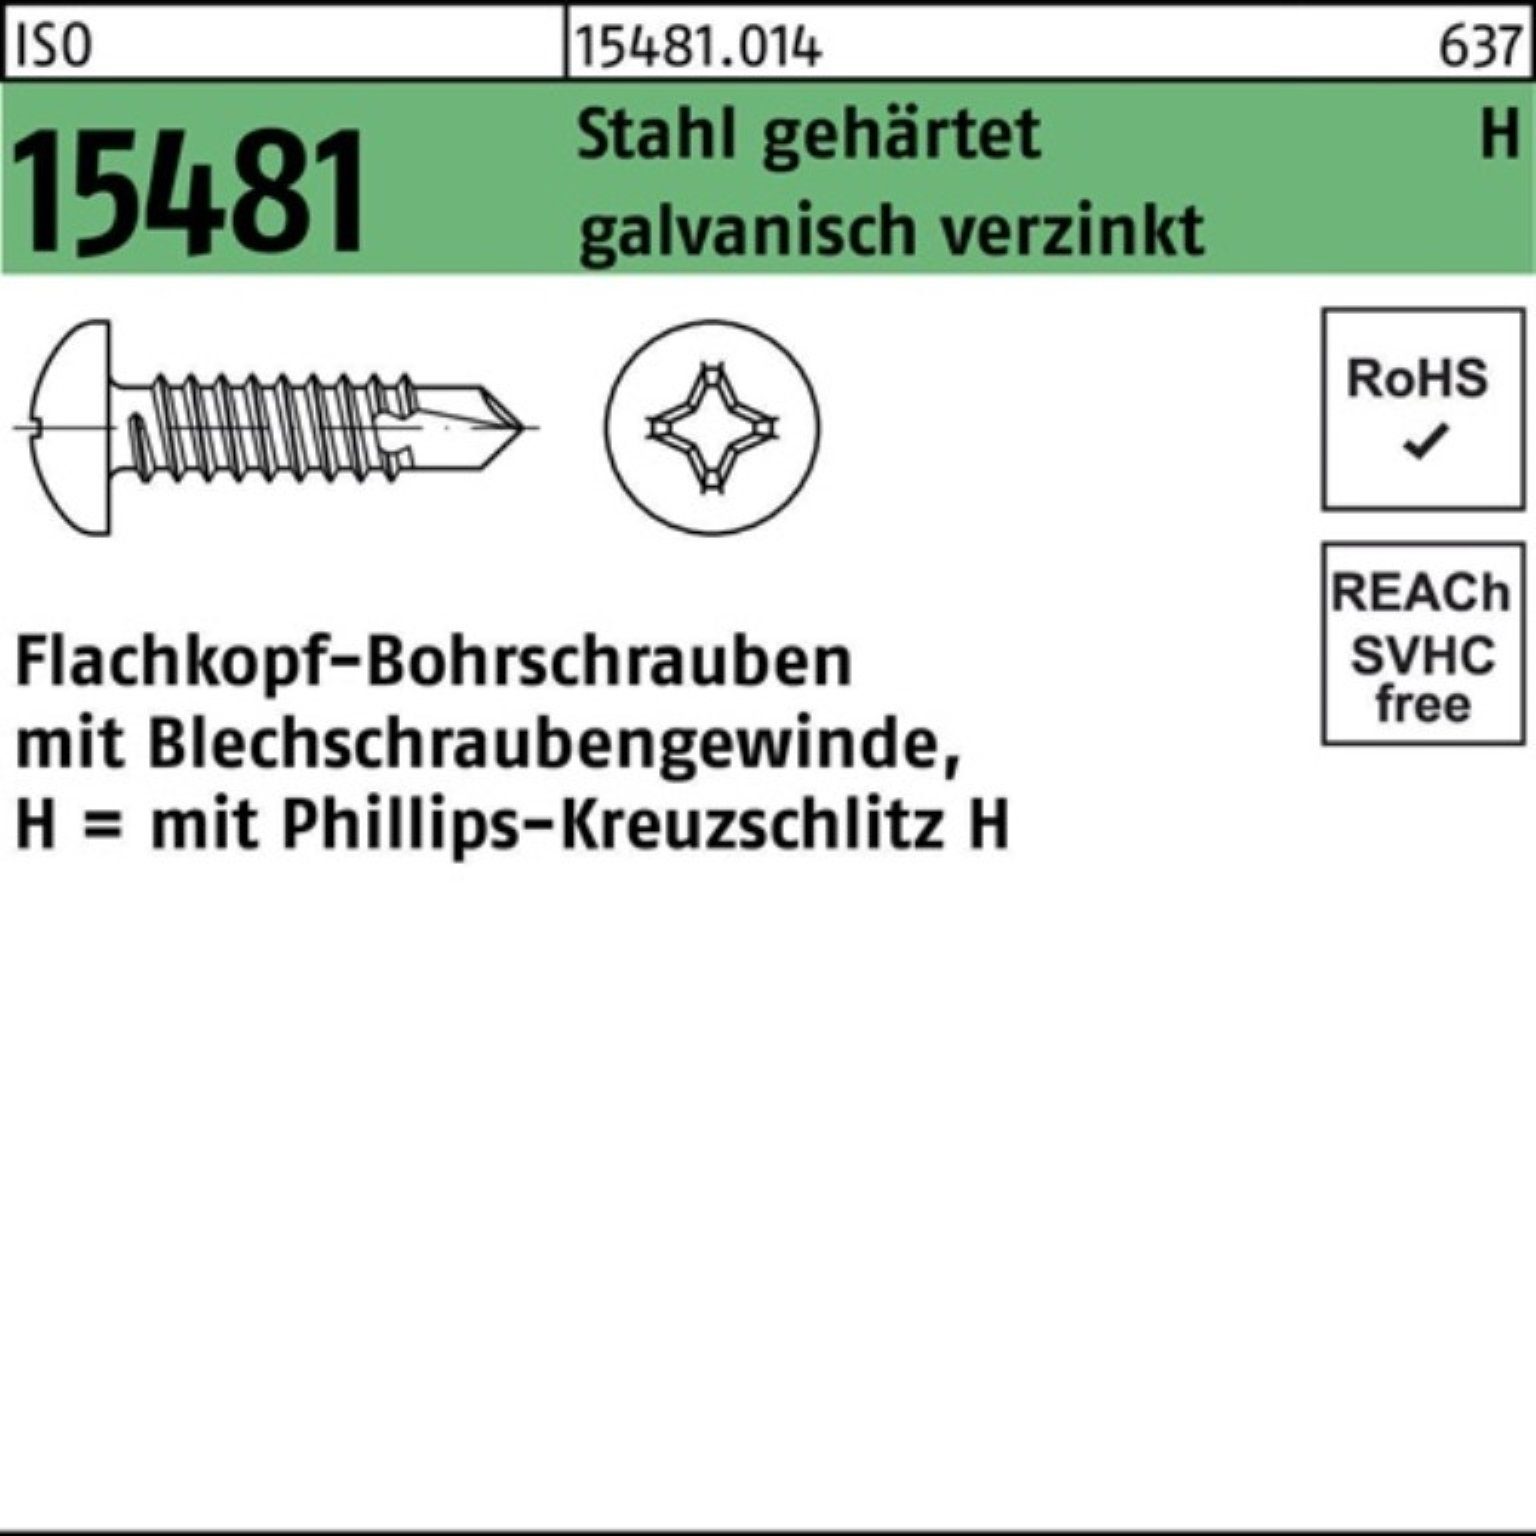 500er ST FLAKObohrschraube Bohrschraube 5,5x16-H PH 15481 ISO Reyher Pack gehärtet Stahl